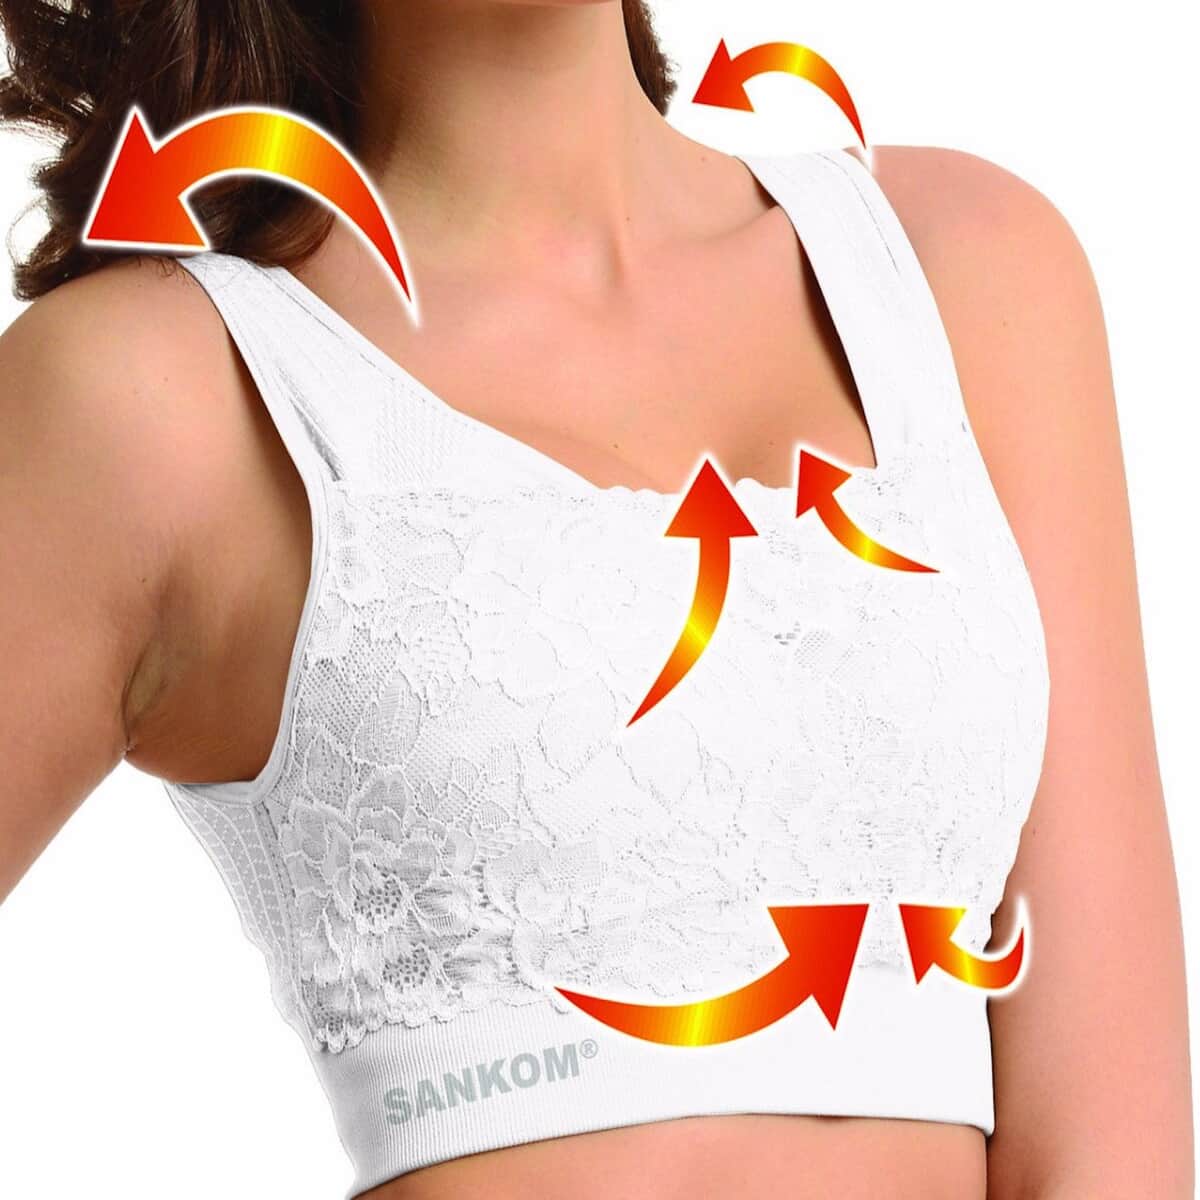 Buy SANKOM Patent Classic Support & Posture Lace Bra - M/L , White